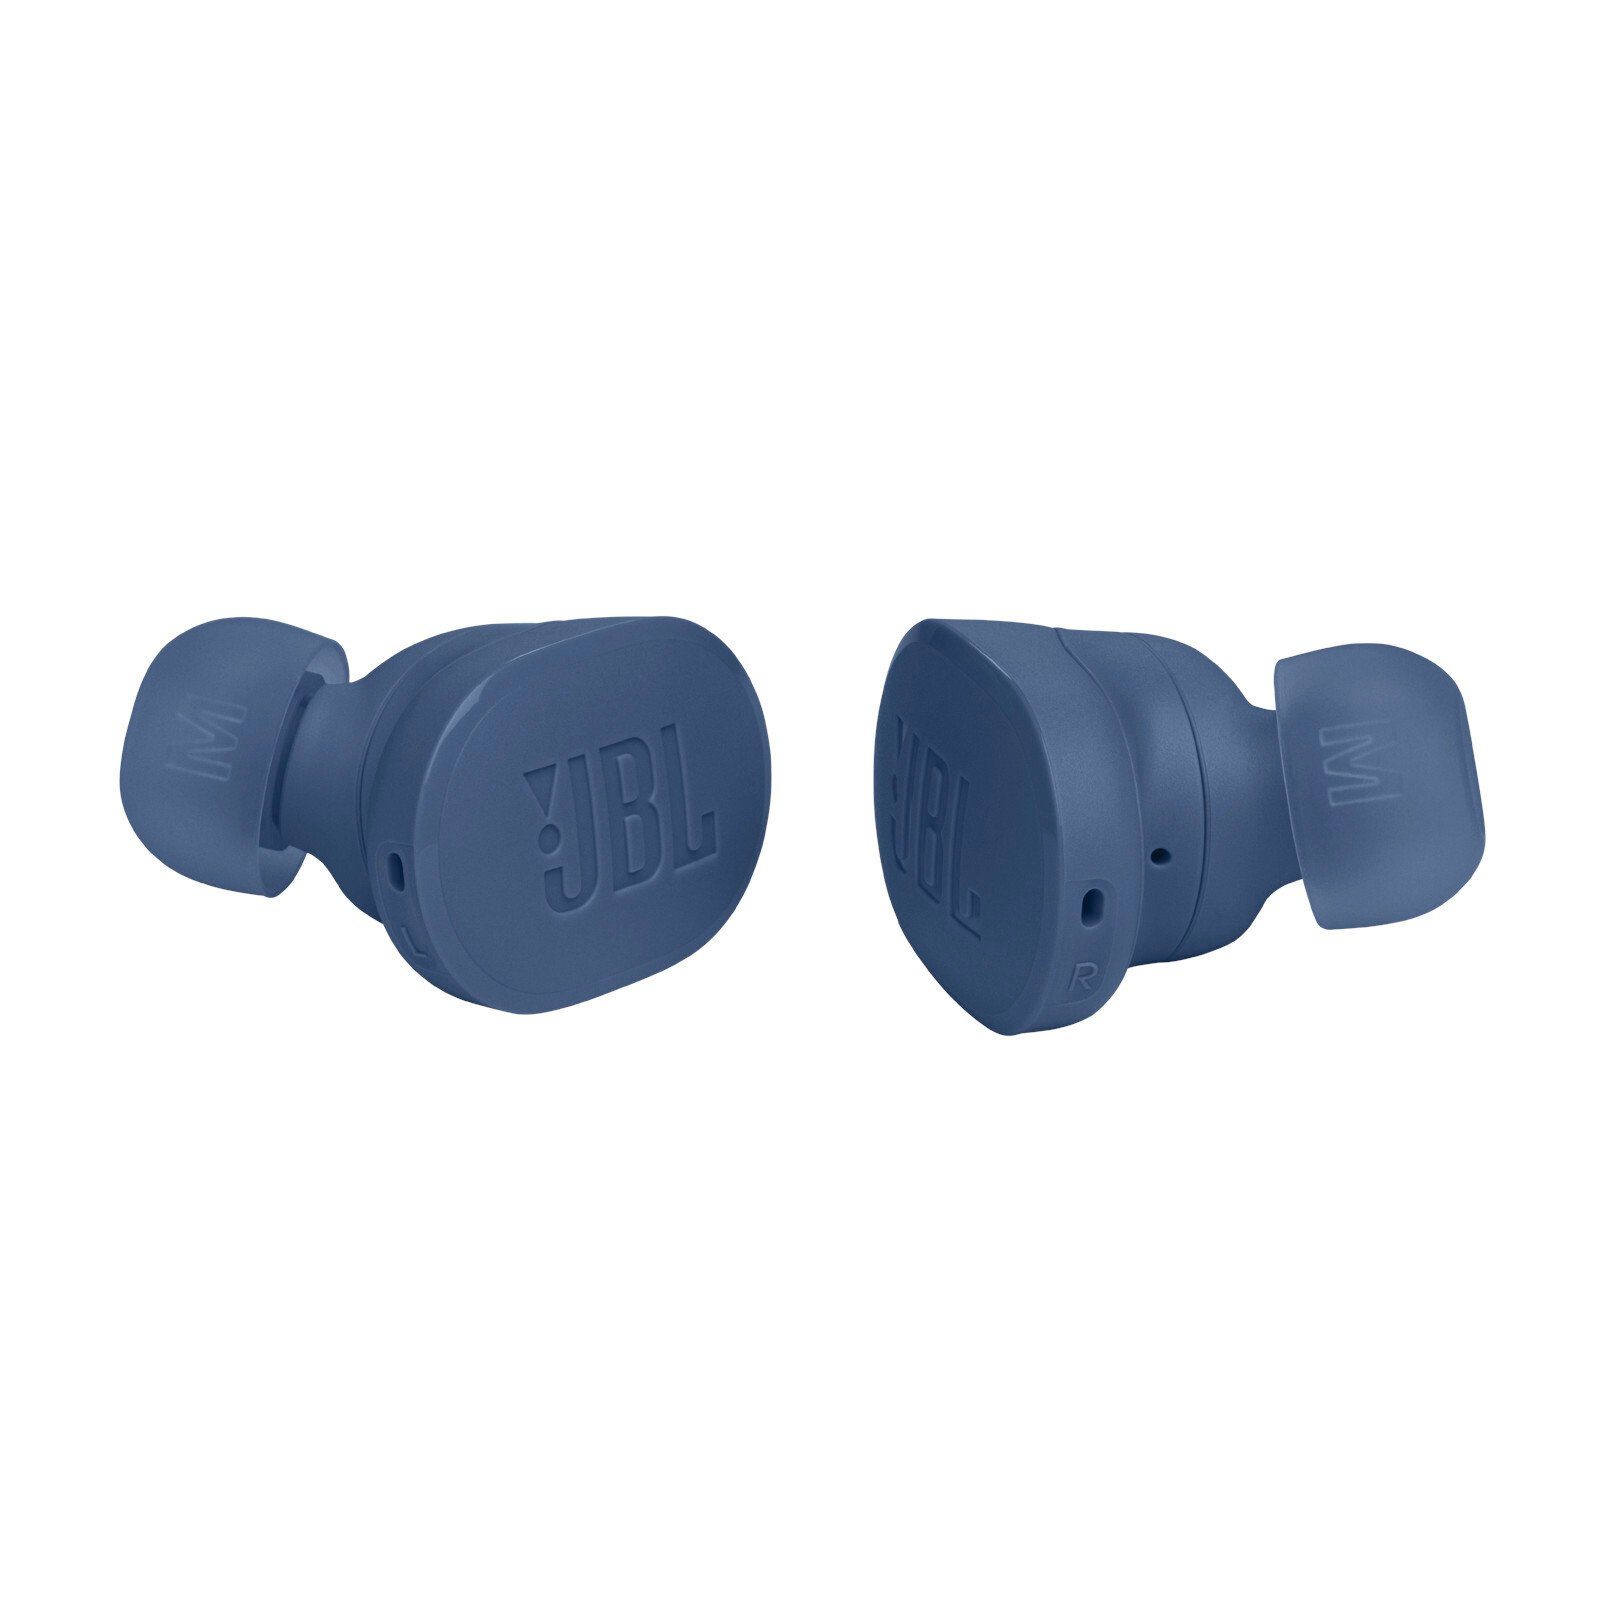 In-Ear-Kopfhörer Tune JBL Blau BUDS (ANC) wireless (Active Noise Cancelling